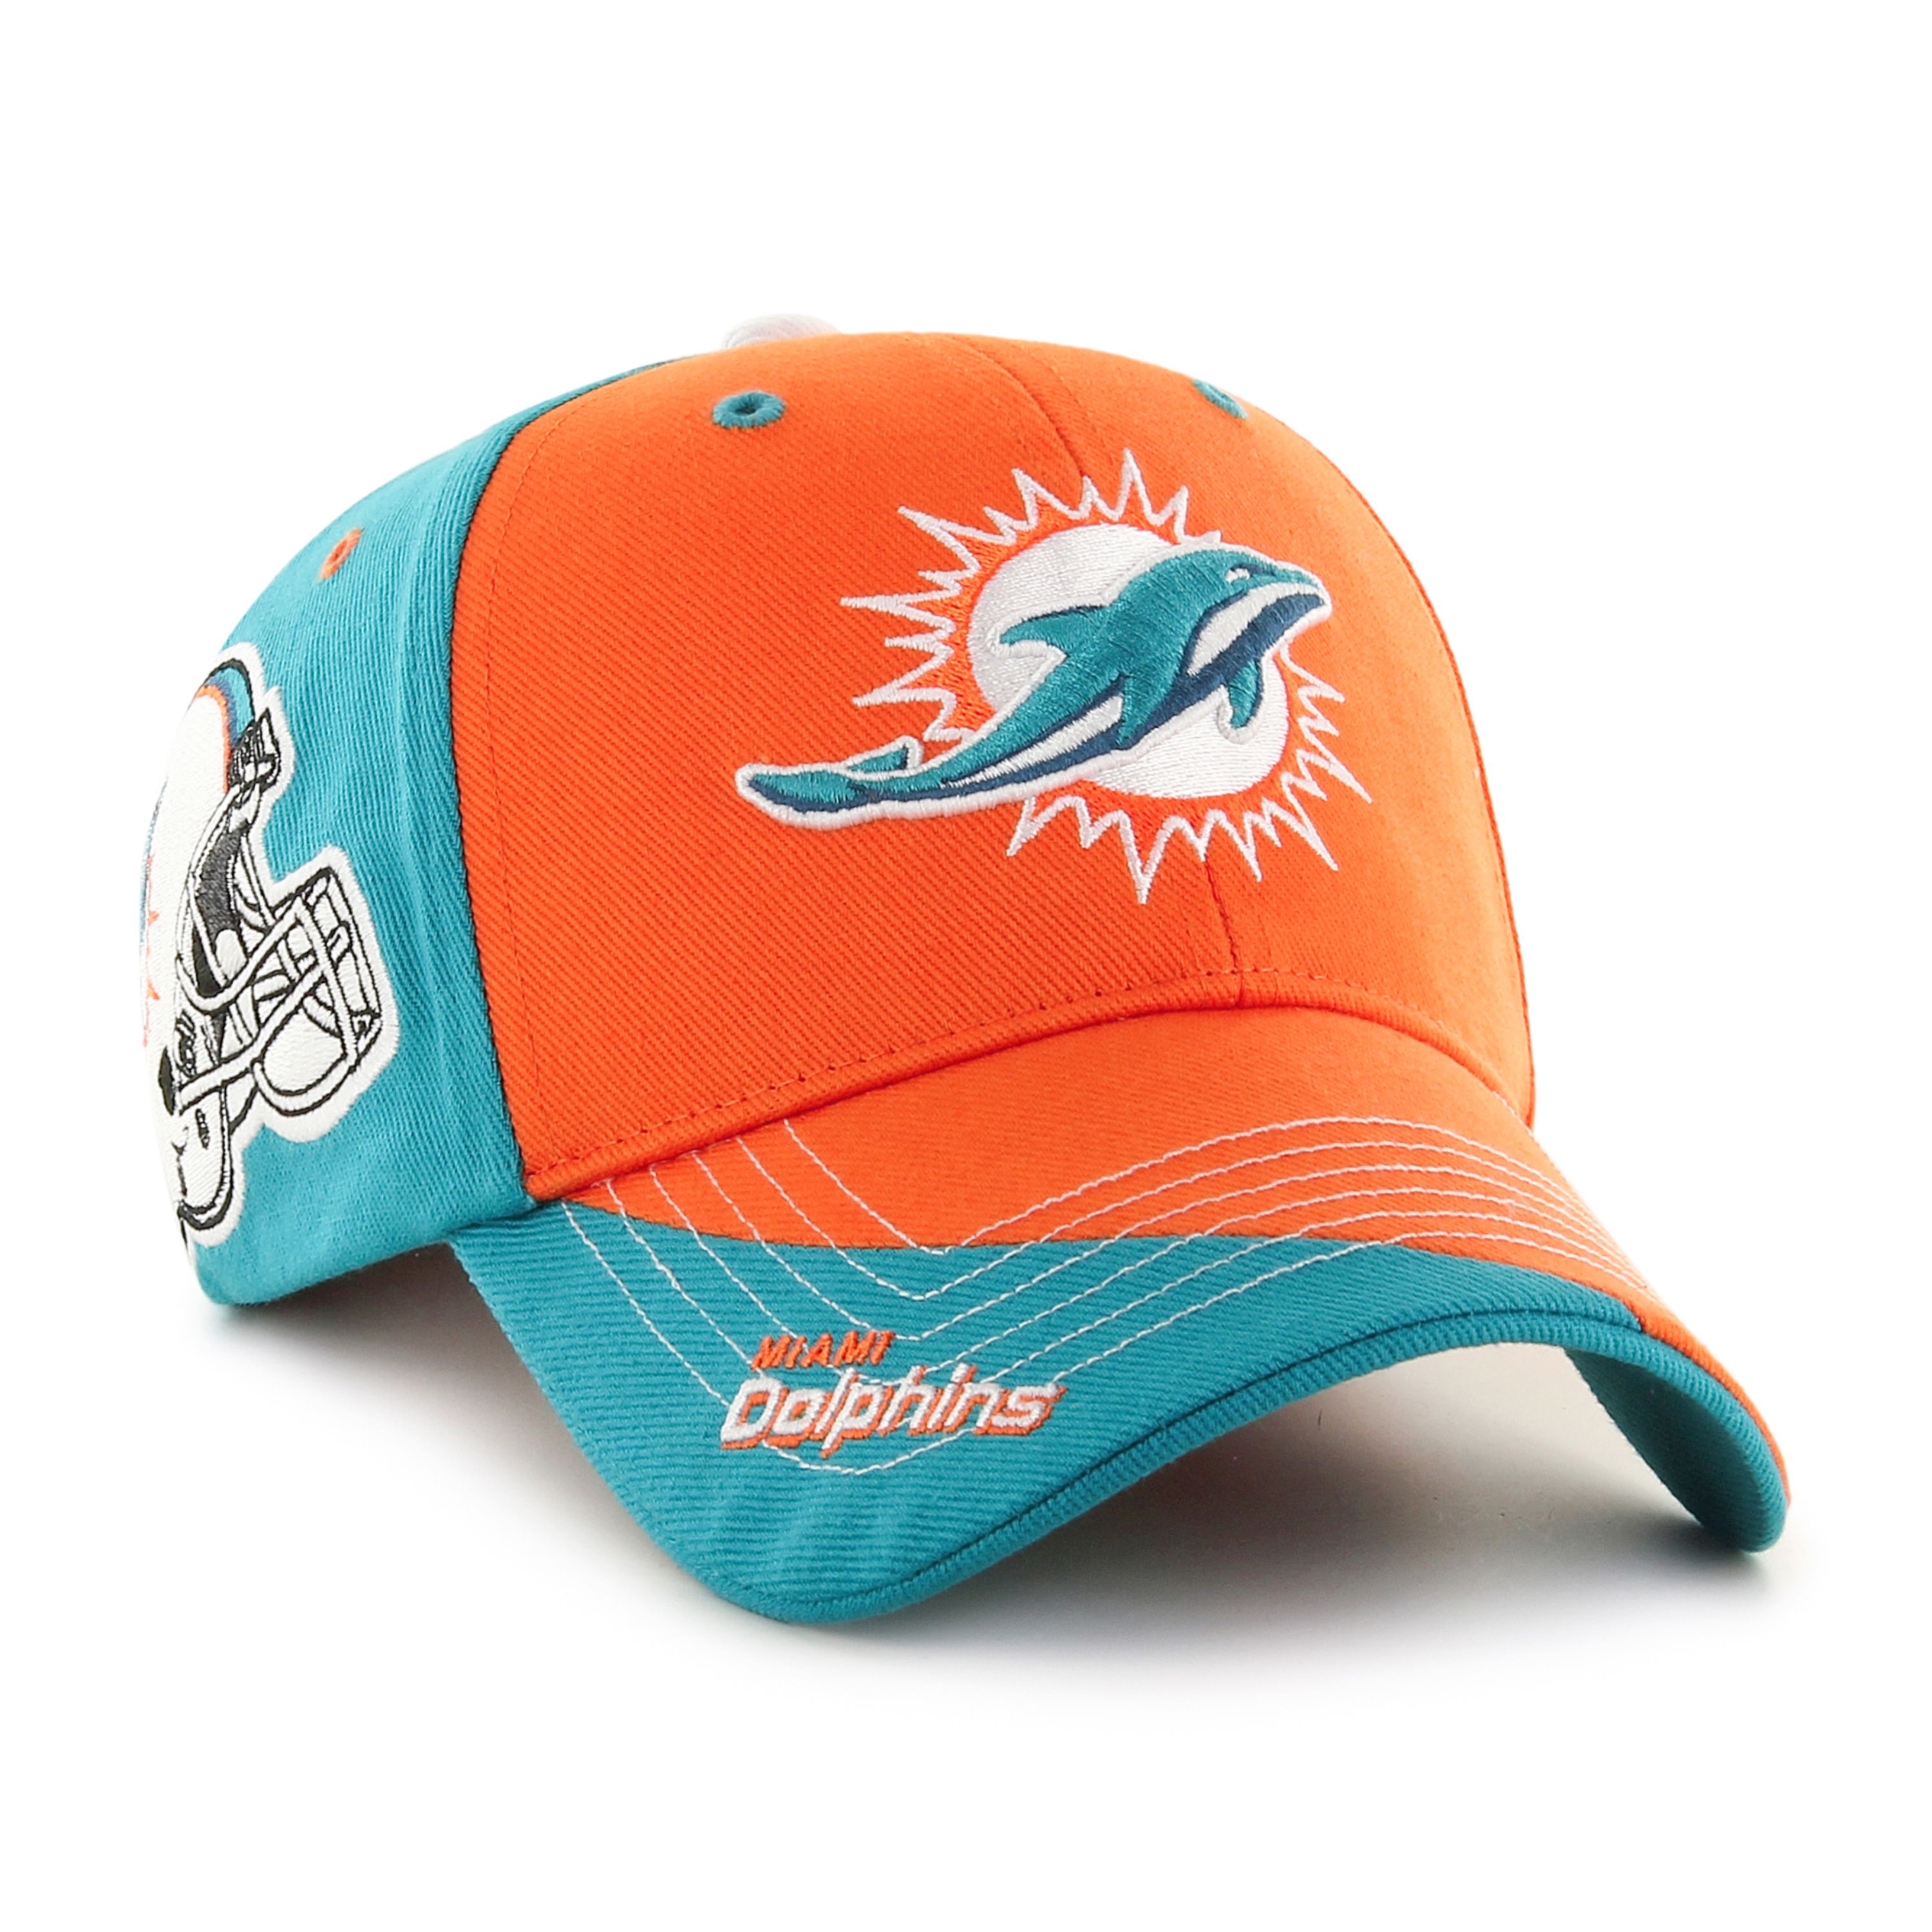 Fan Favorite - NFL Hubris Adjustable Cap, Miami Dolphins - image 2 of 3